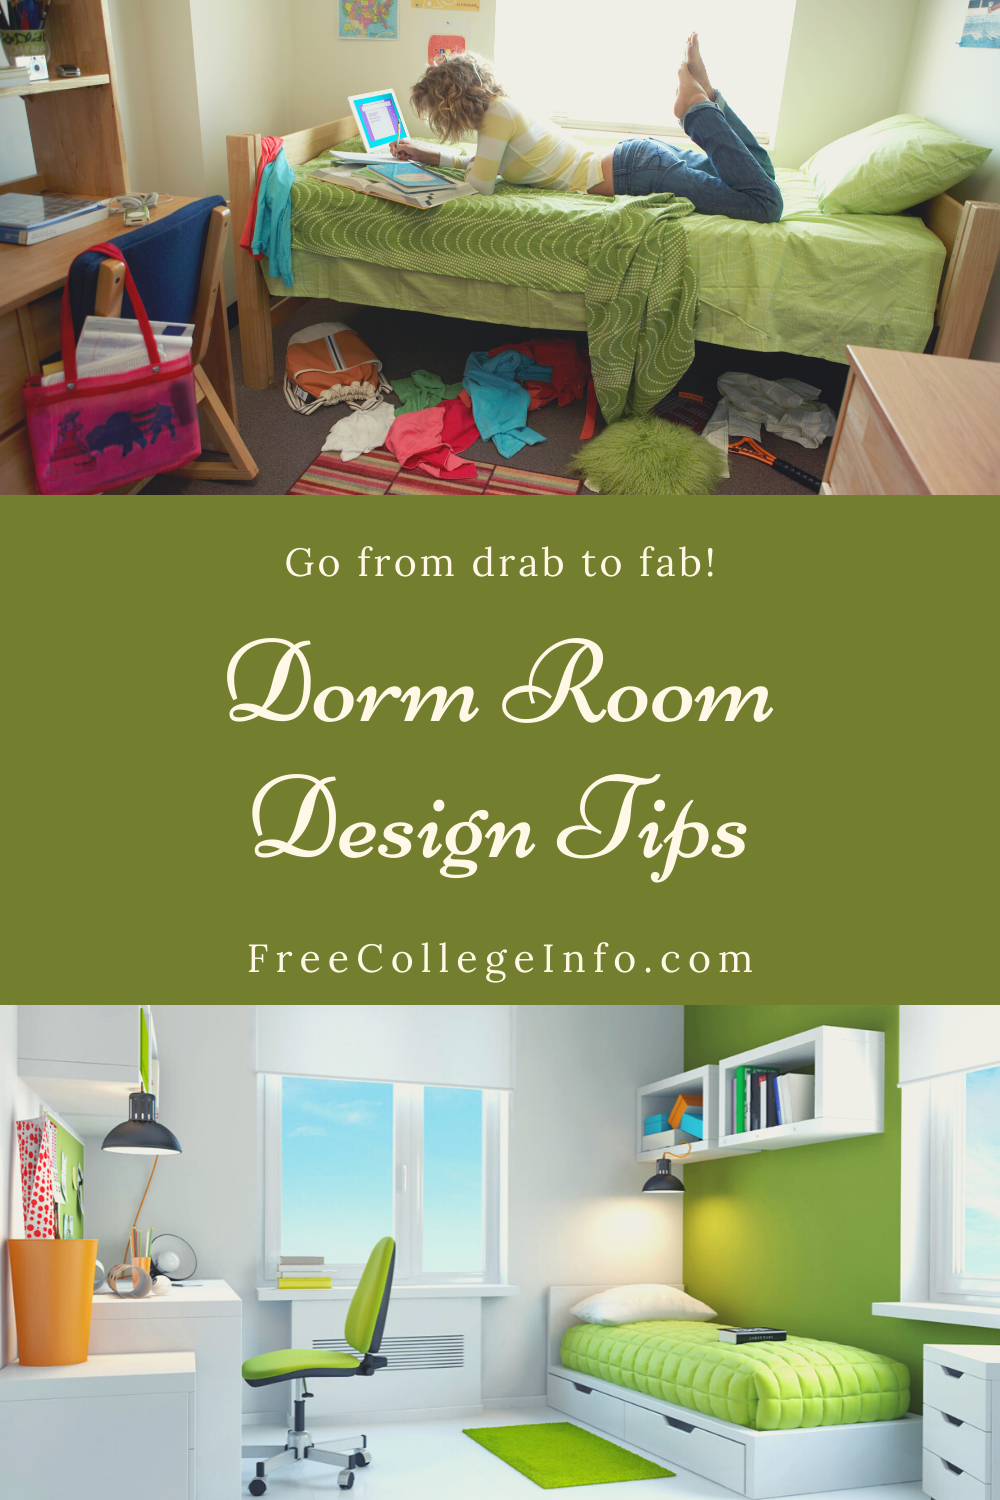 Dorm Room Design Tips